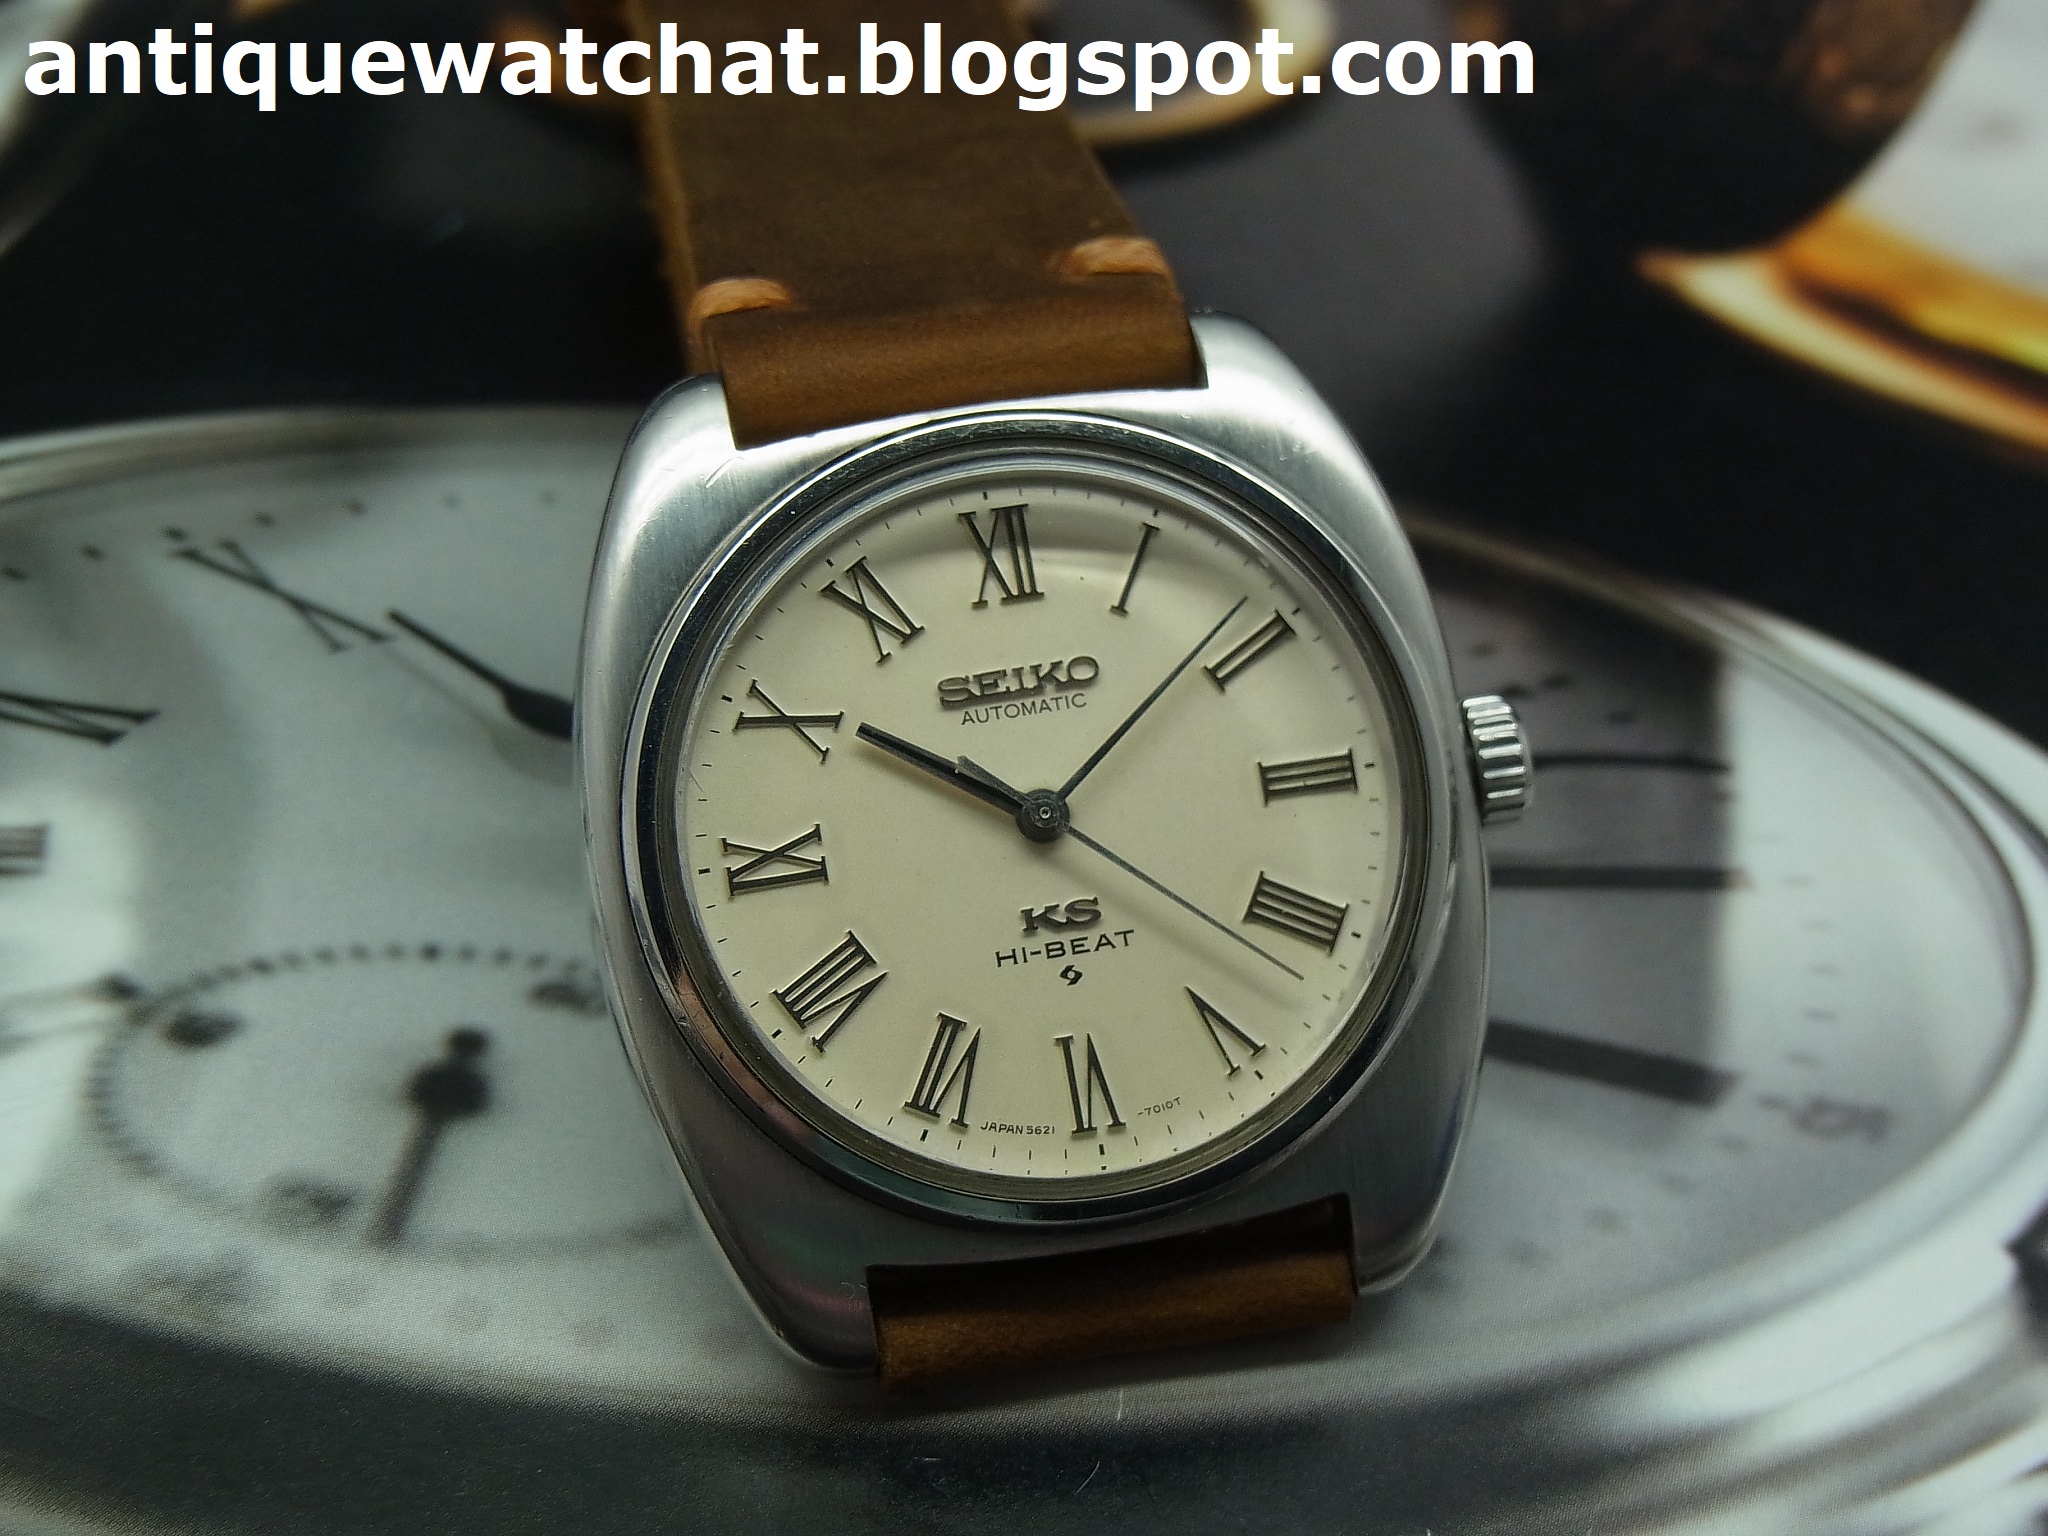 Antique Watch Bar: KING SEIKO HI-BEAT 25 JEWELS 5621-7000 AUTOMATIC KS277  (SOLD)